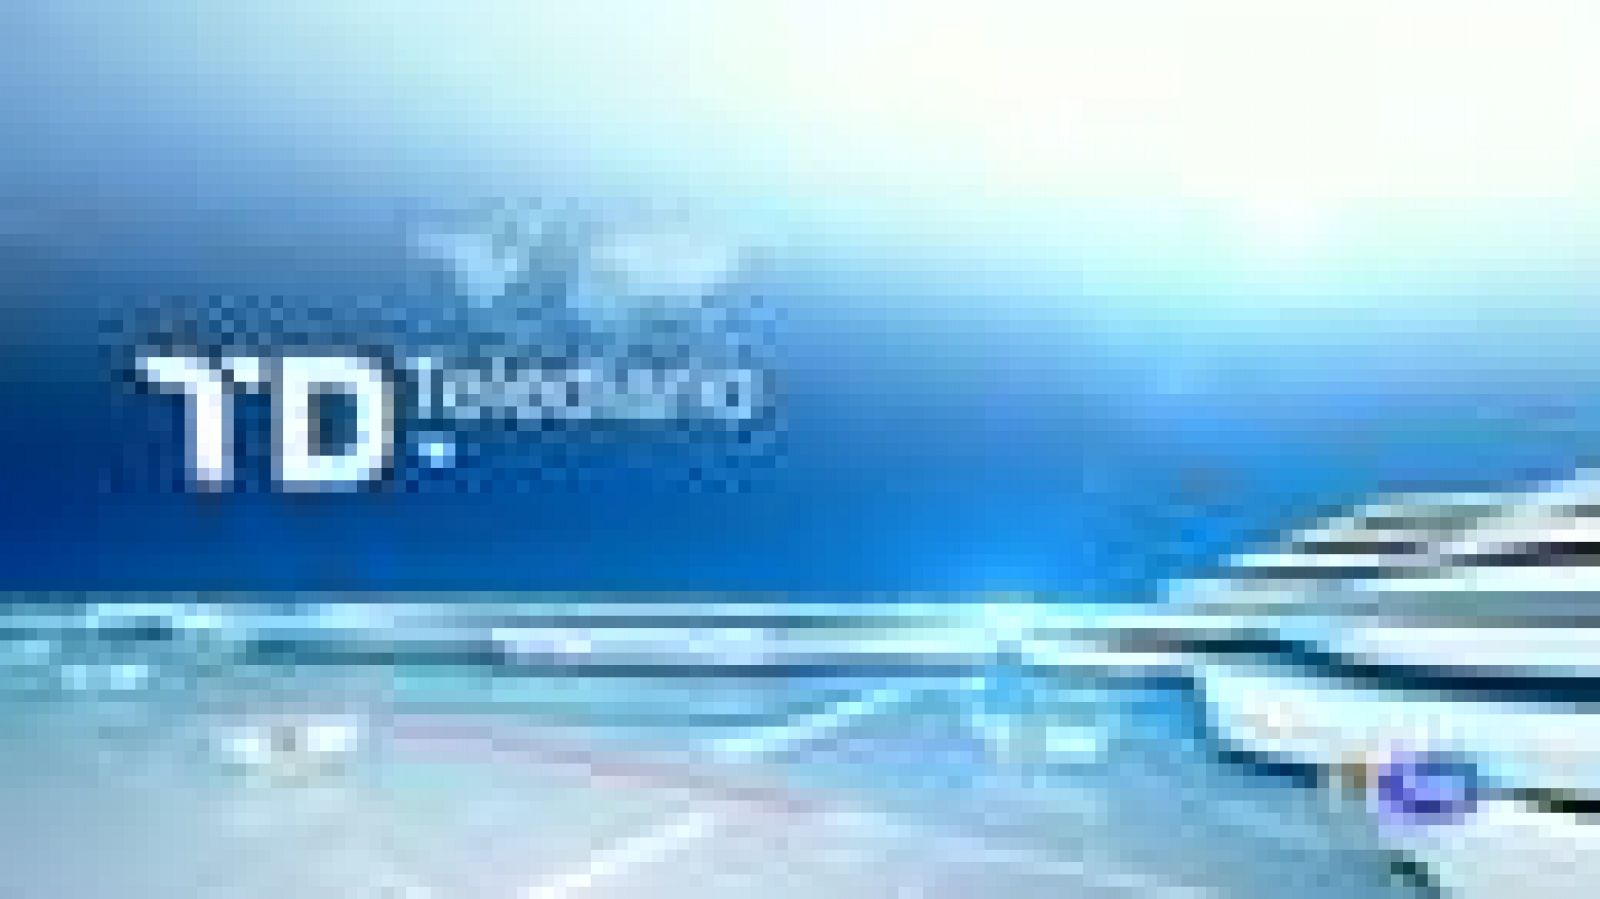 Telediario 1: Telediario Matinal en 4' - 24/04/12 | RTVE Play